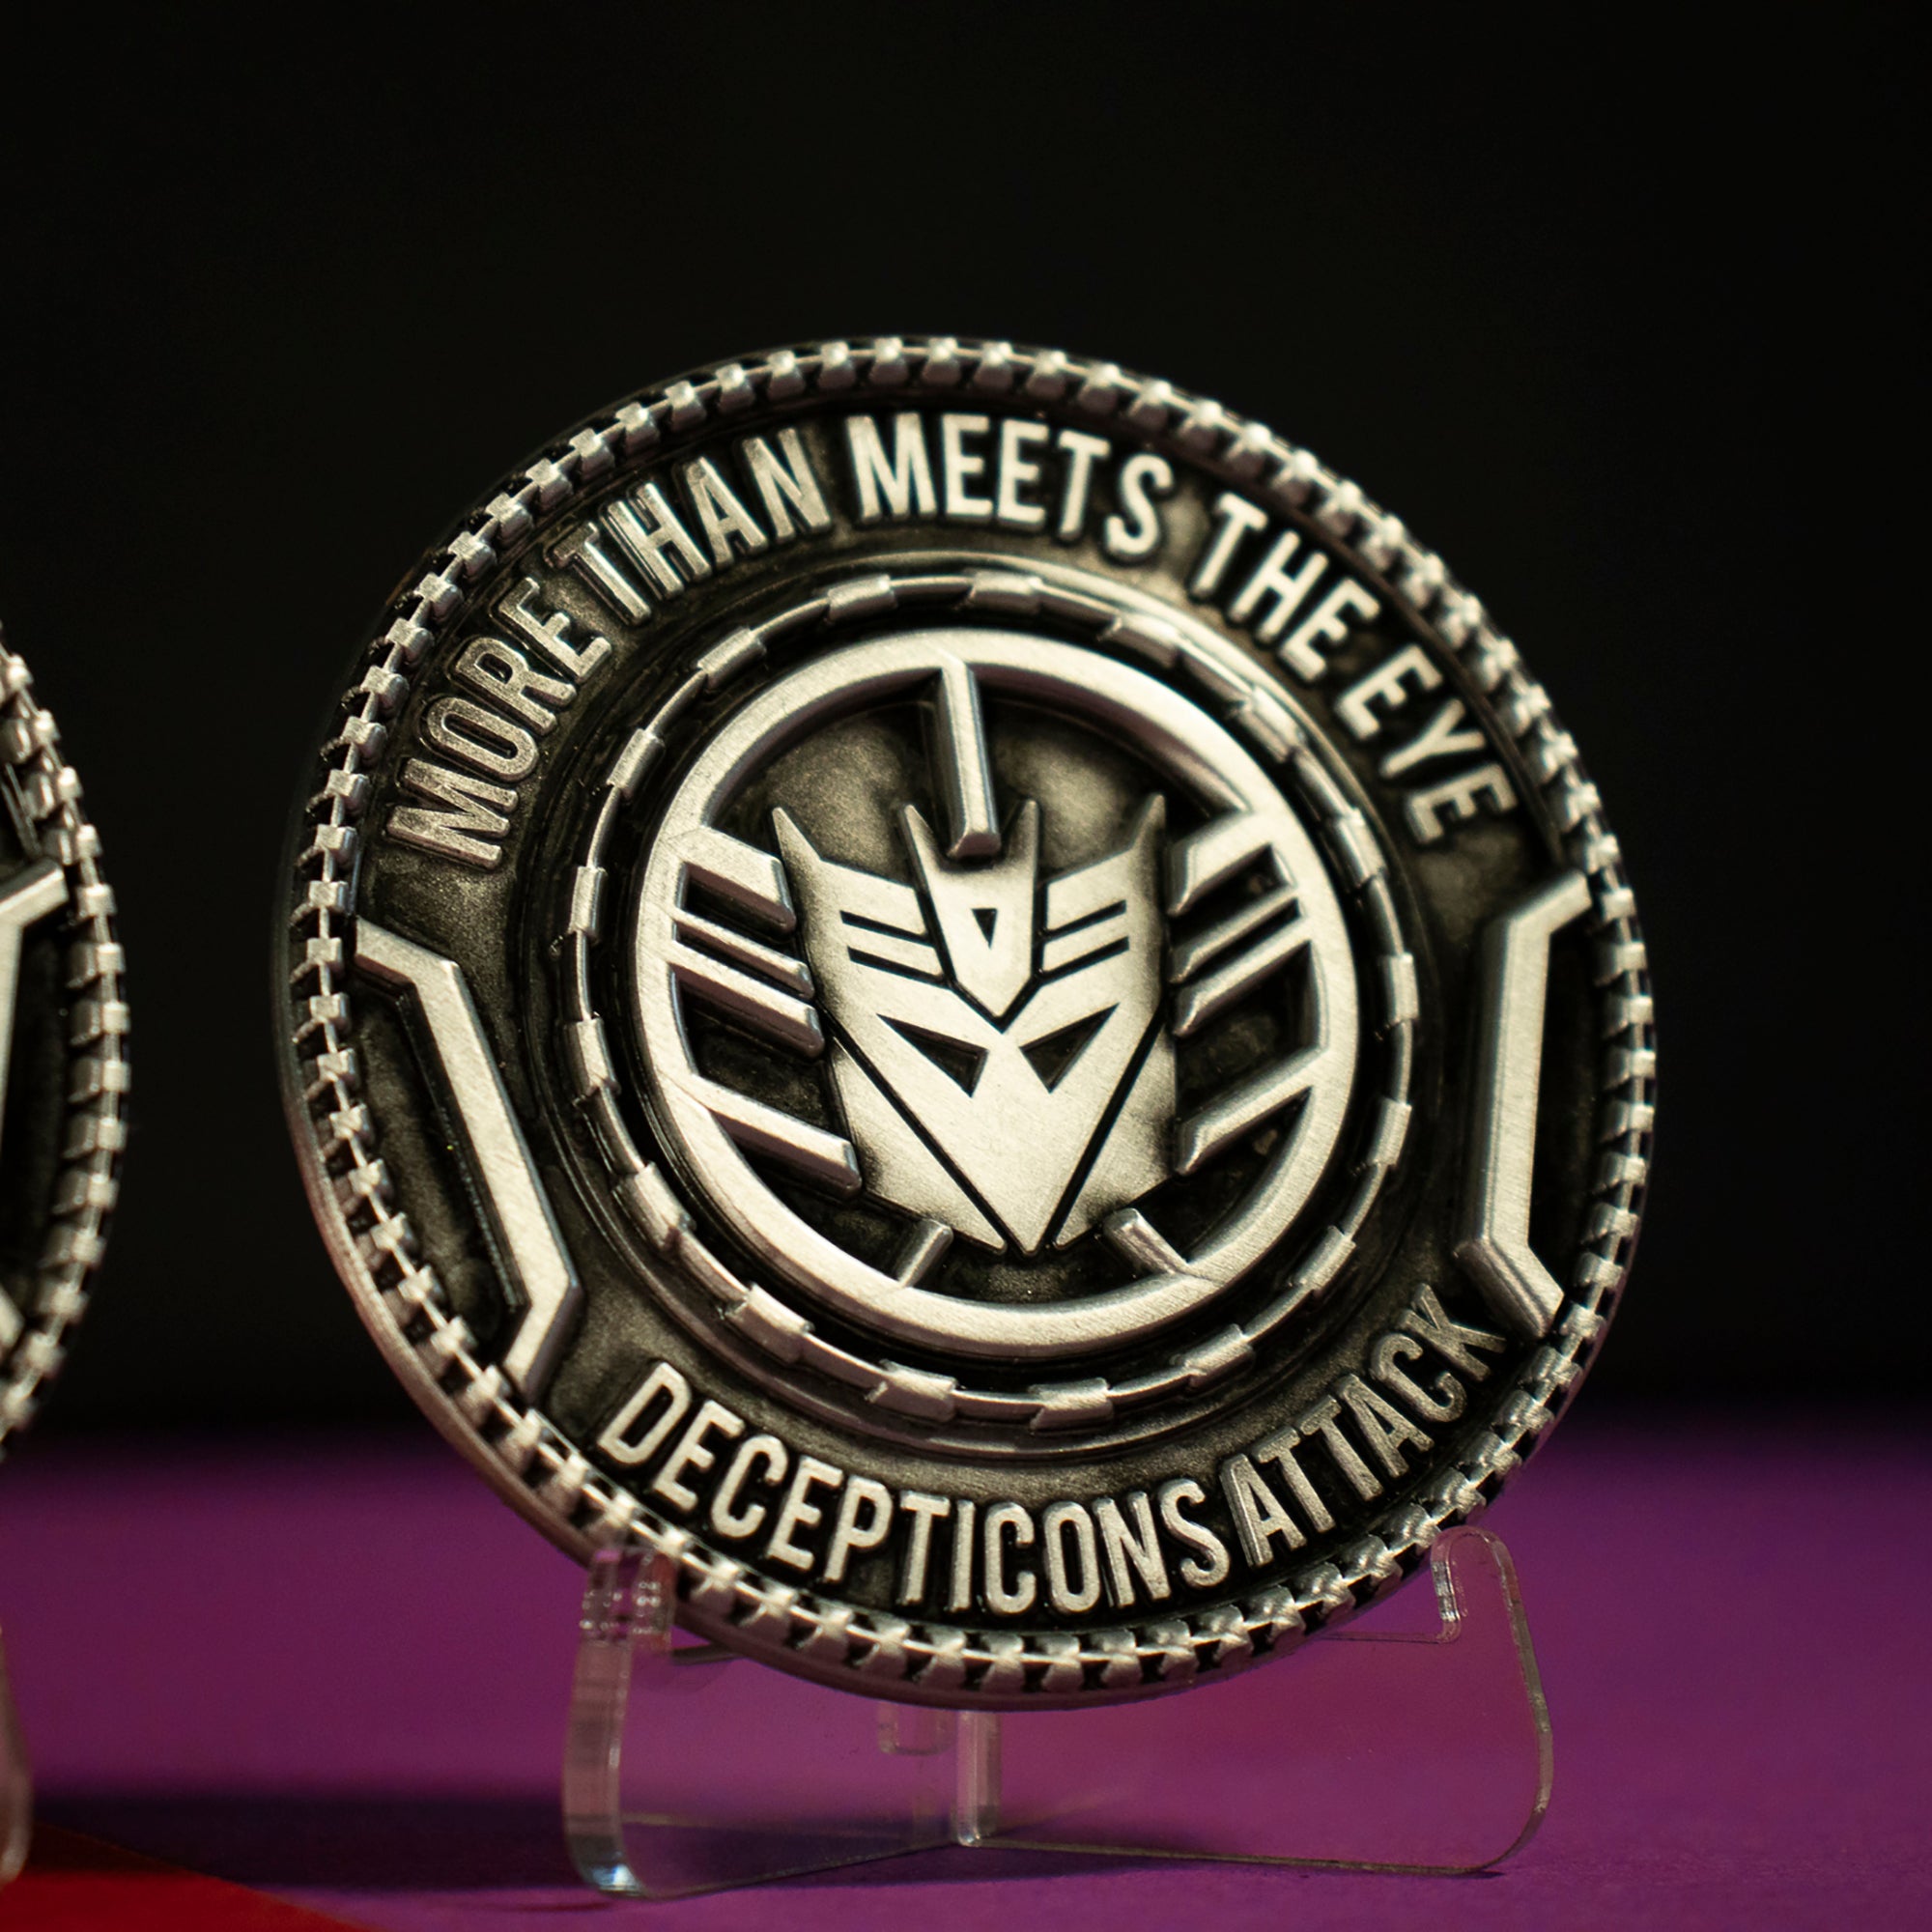 Transformers Medallion Set - Presale